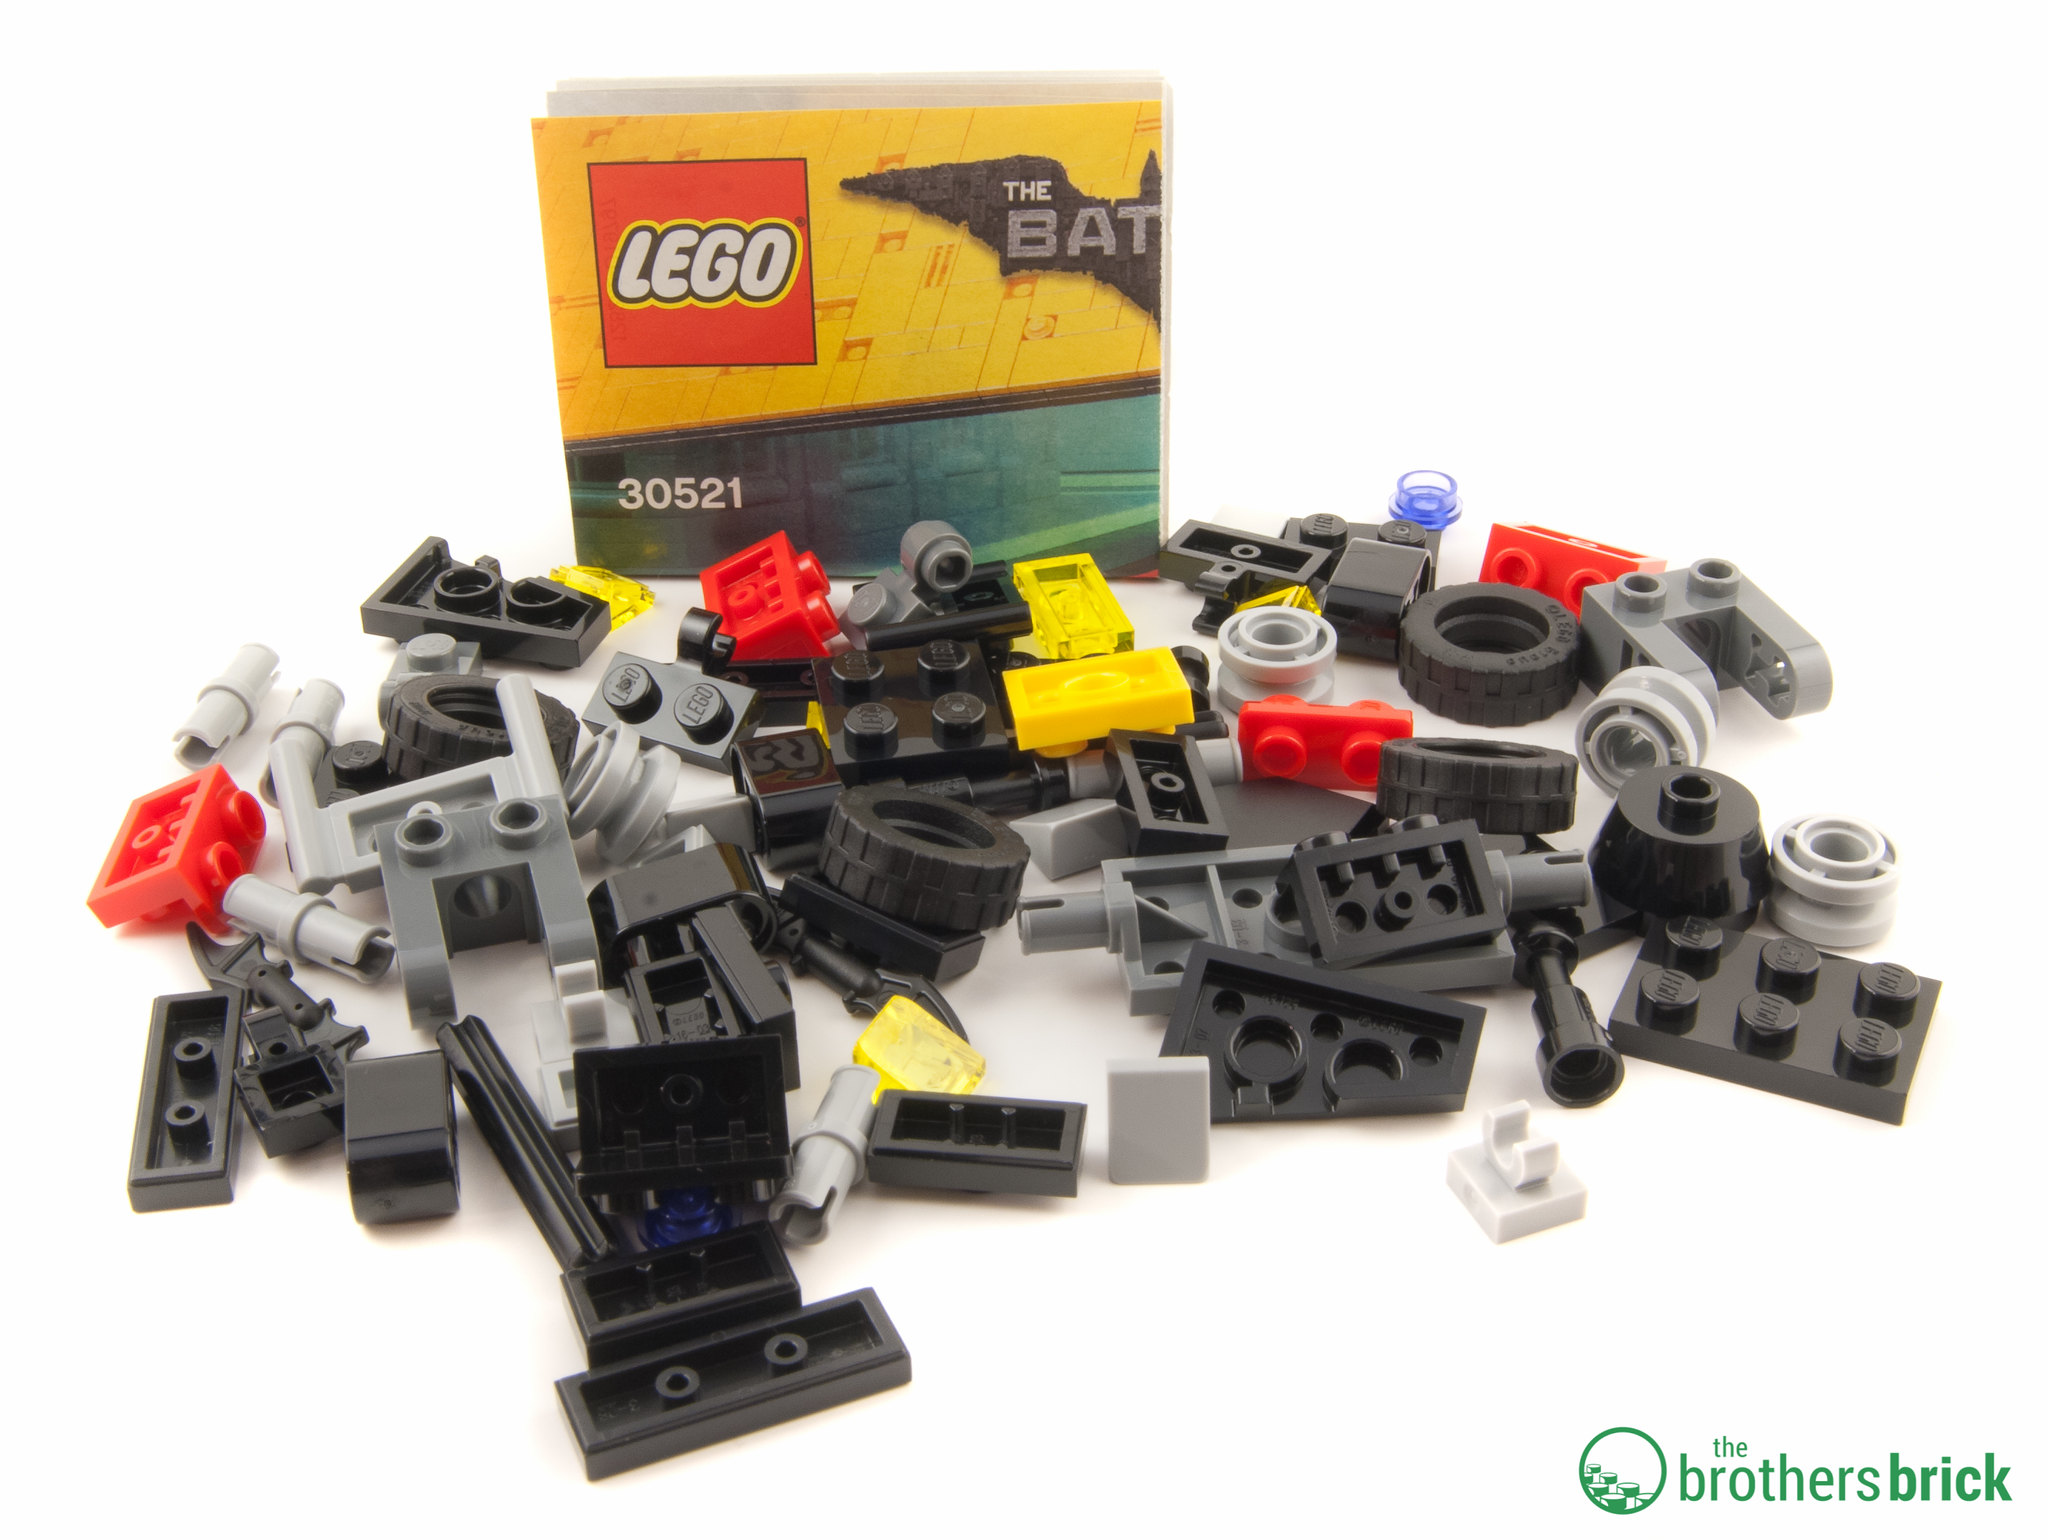 New LEGO Batman Movie Batmobile, Batwing mini-sets ...